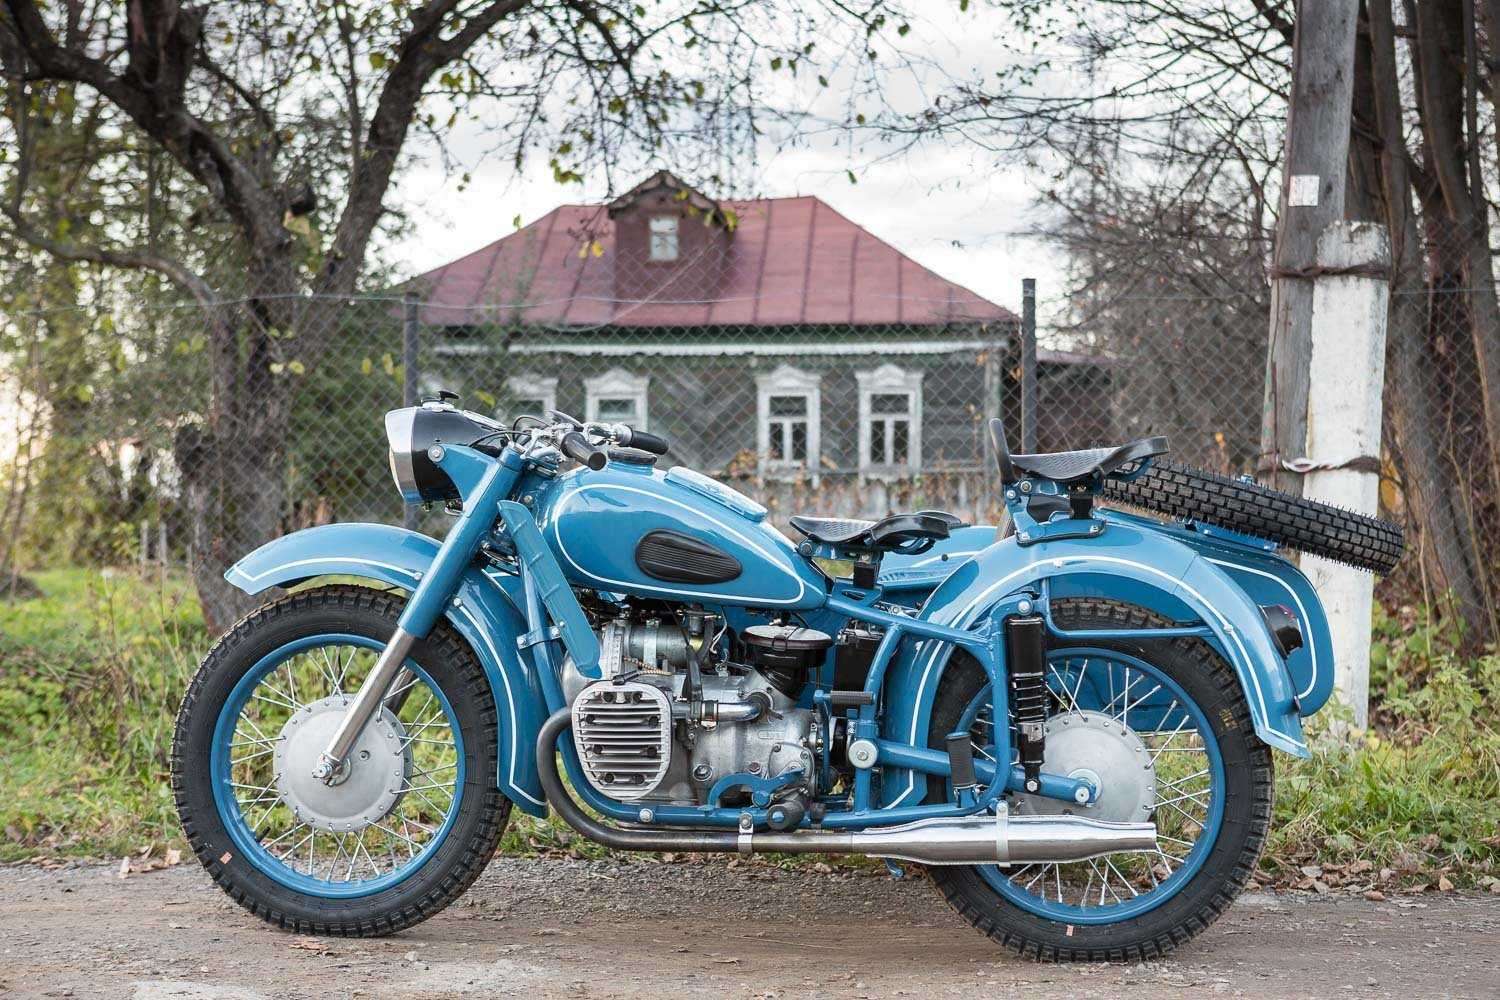 motocykl K-750 "Irbit" puzzle online ze zdjęcia